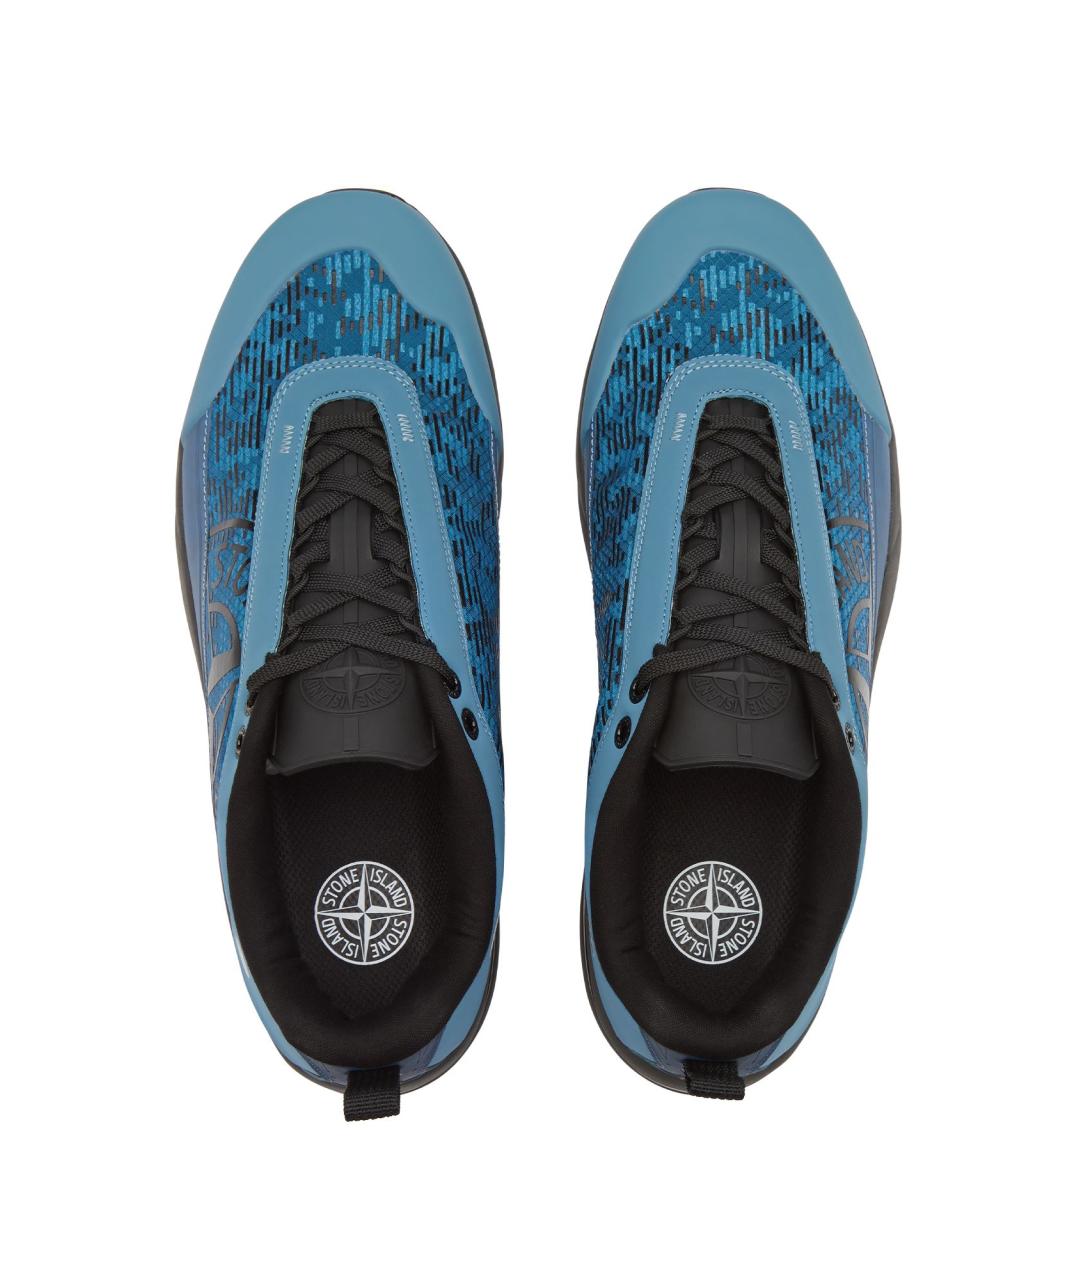 STONE ISLAND Синие синтетические низкие кроссовки / кеды, фото 2